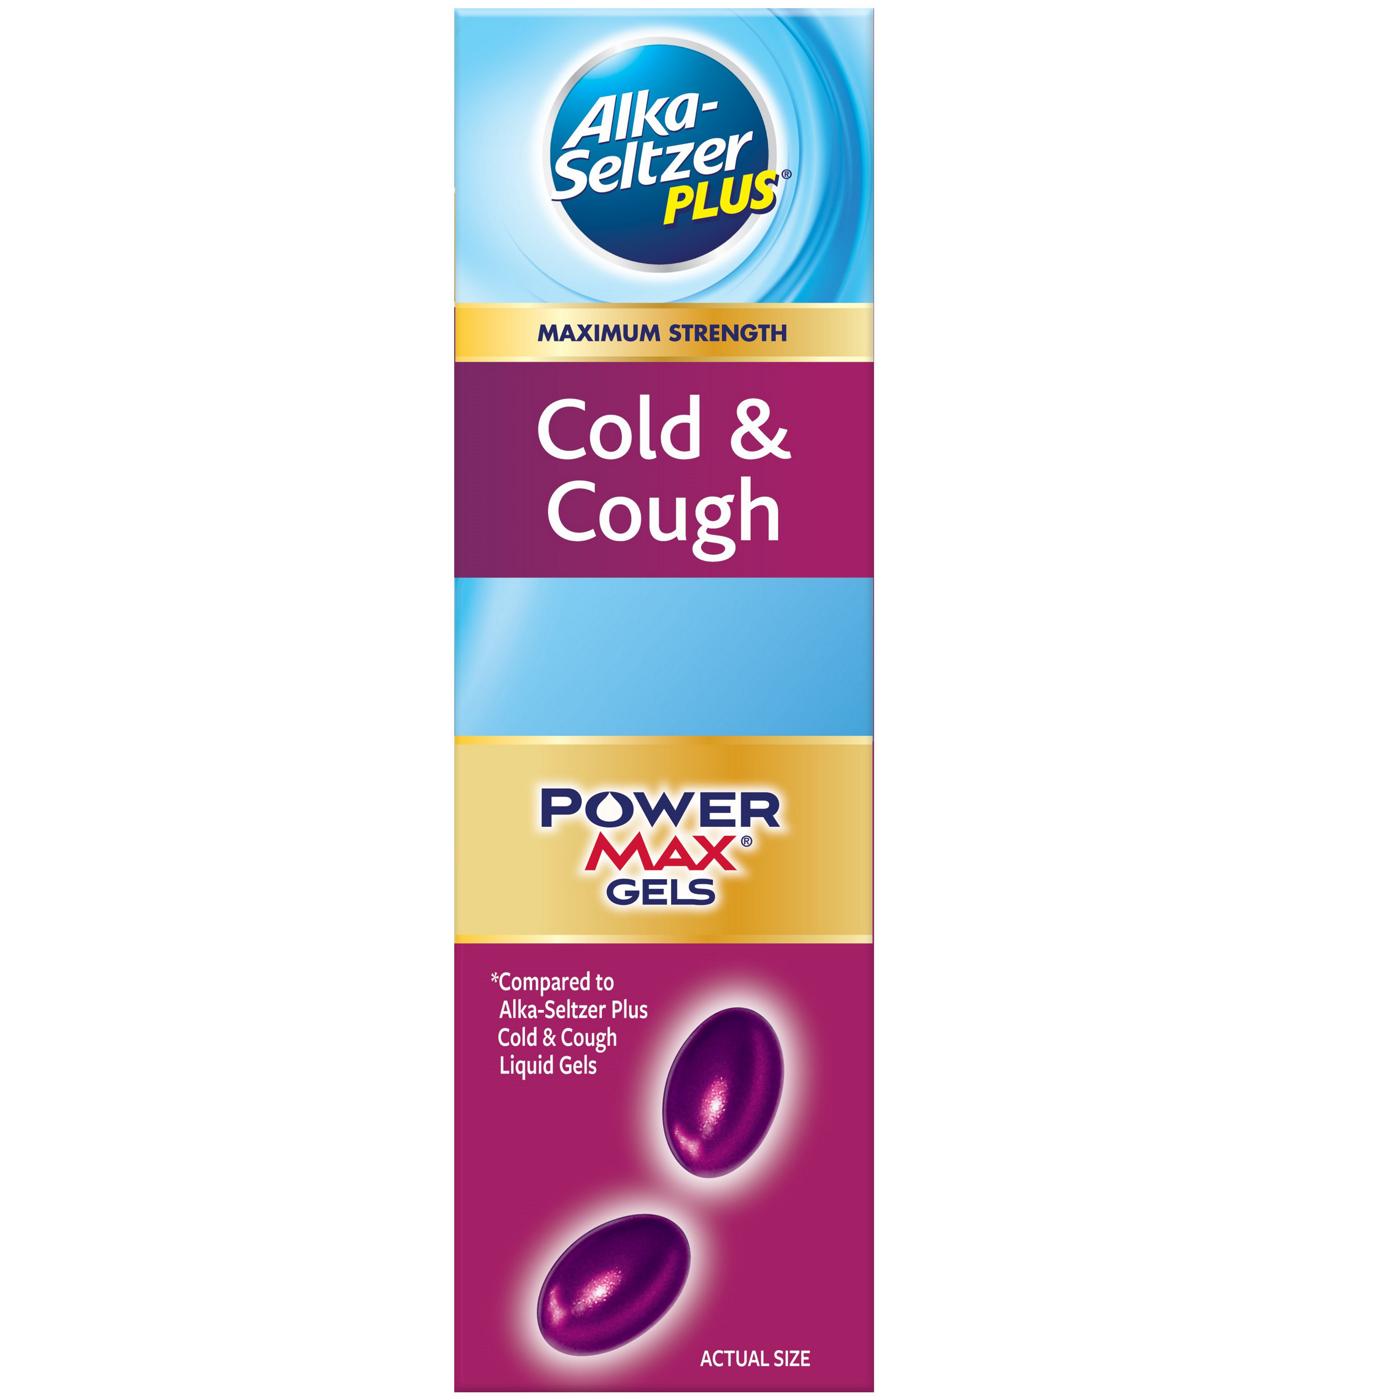 Alka-Seltzer Plus Cold & Cough PowerMax Gels; image 4 of 6